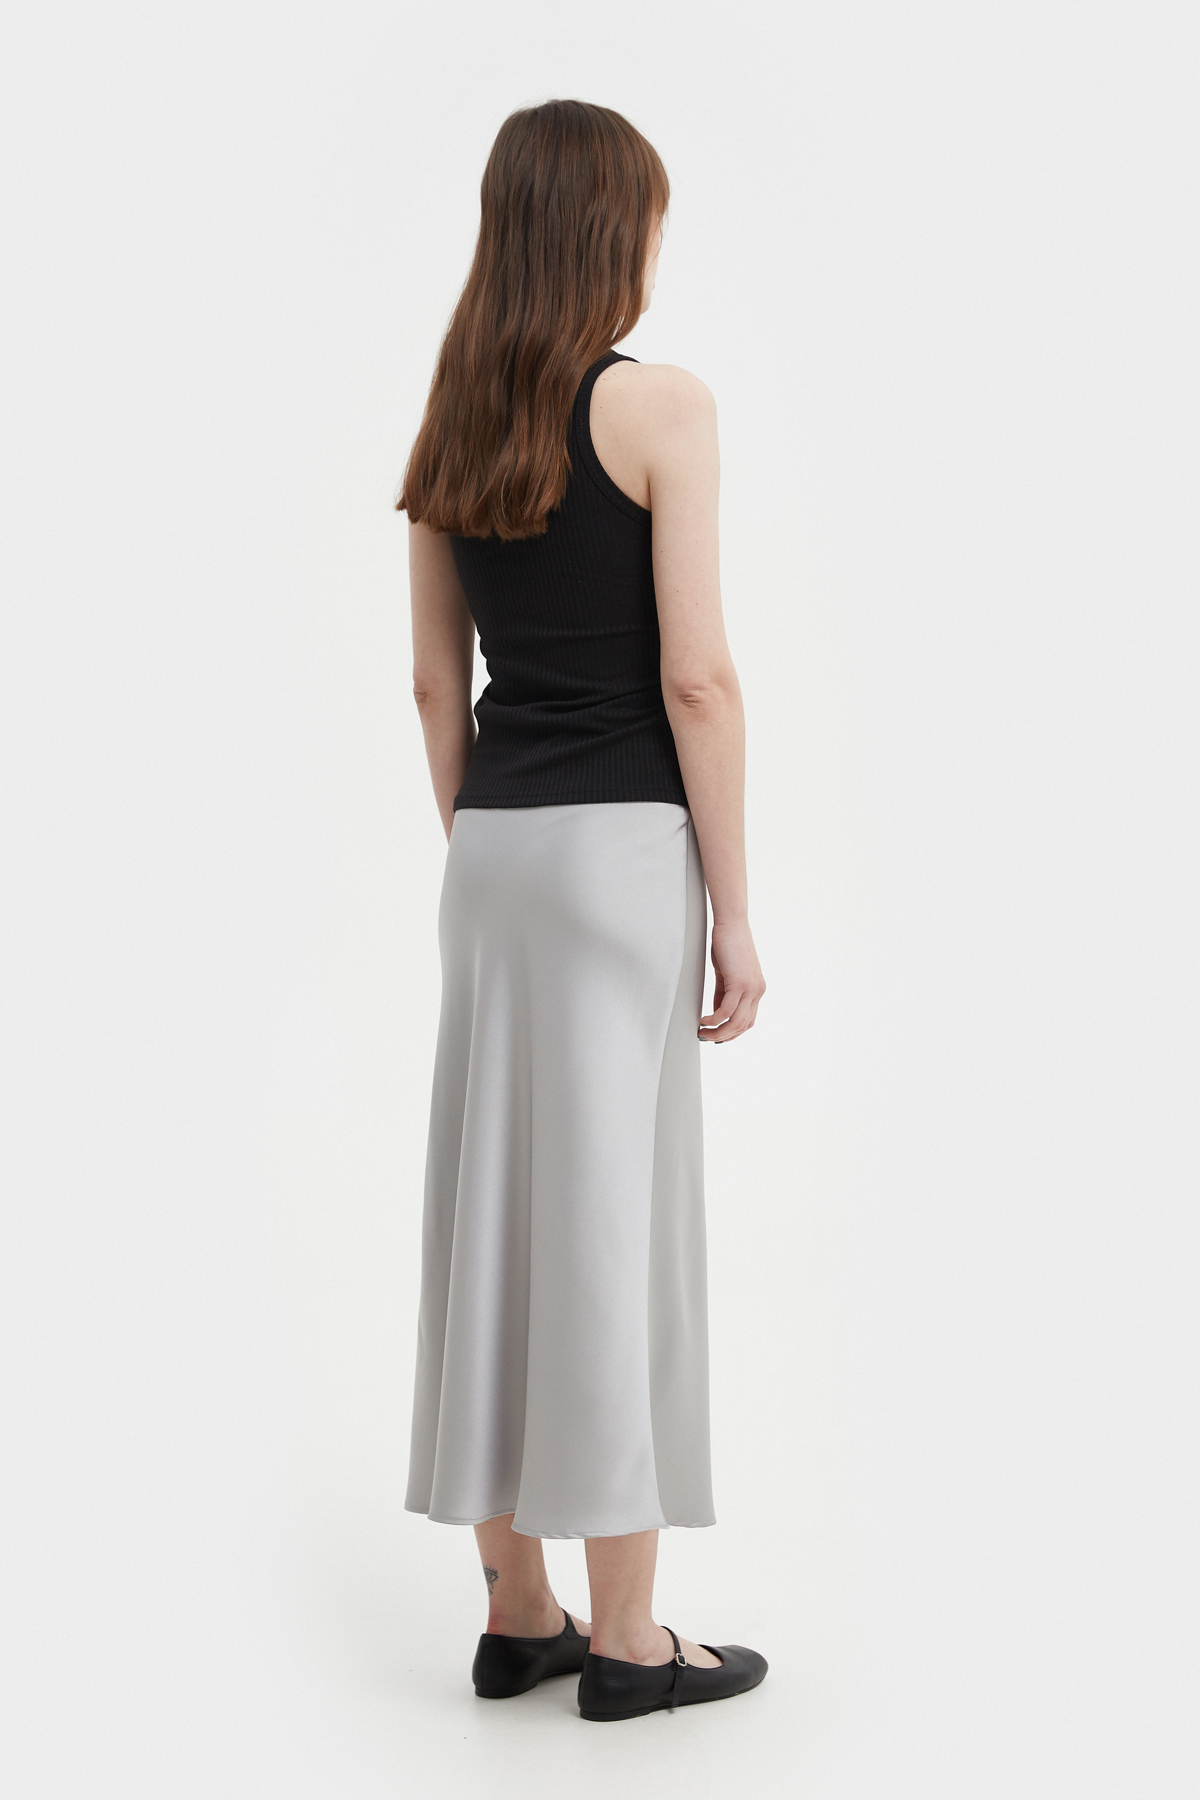 Silver chrome satin elongated midi skirt, photo 4